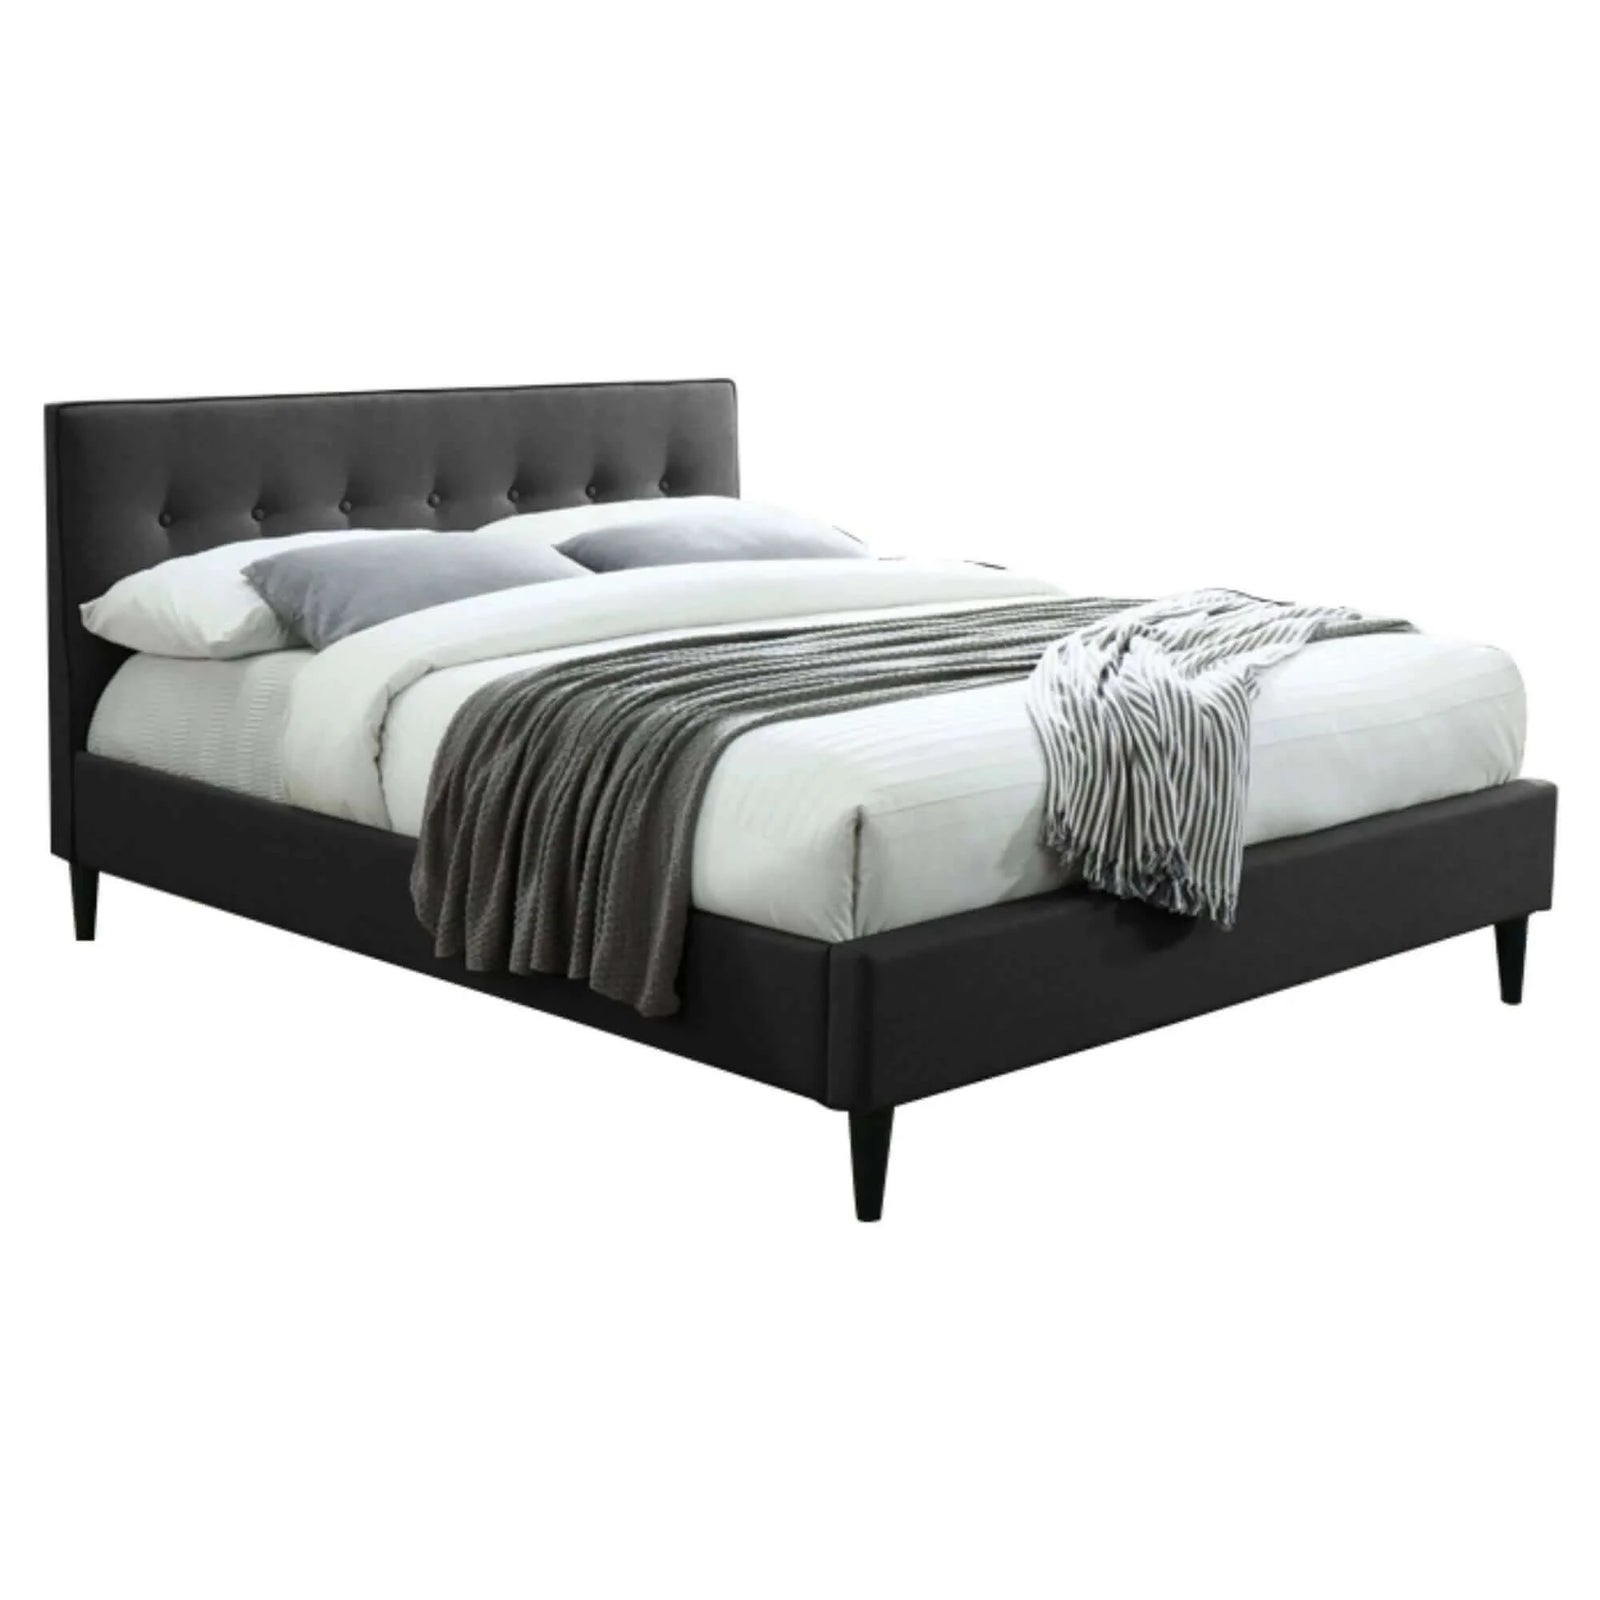 Buy buttercup queen size bed frame timber mattress base fabric upholstered - grey - upinteriors-Upinteriors